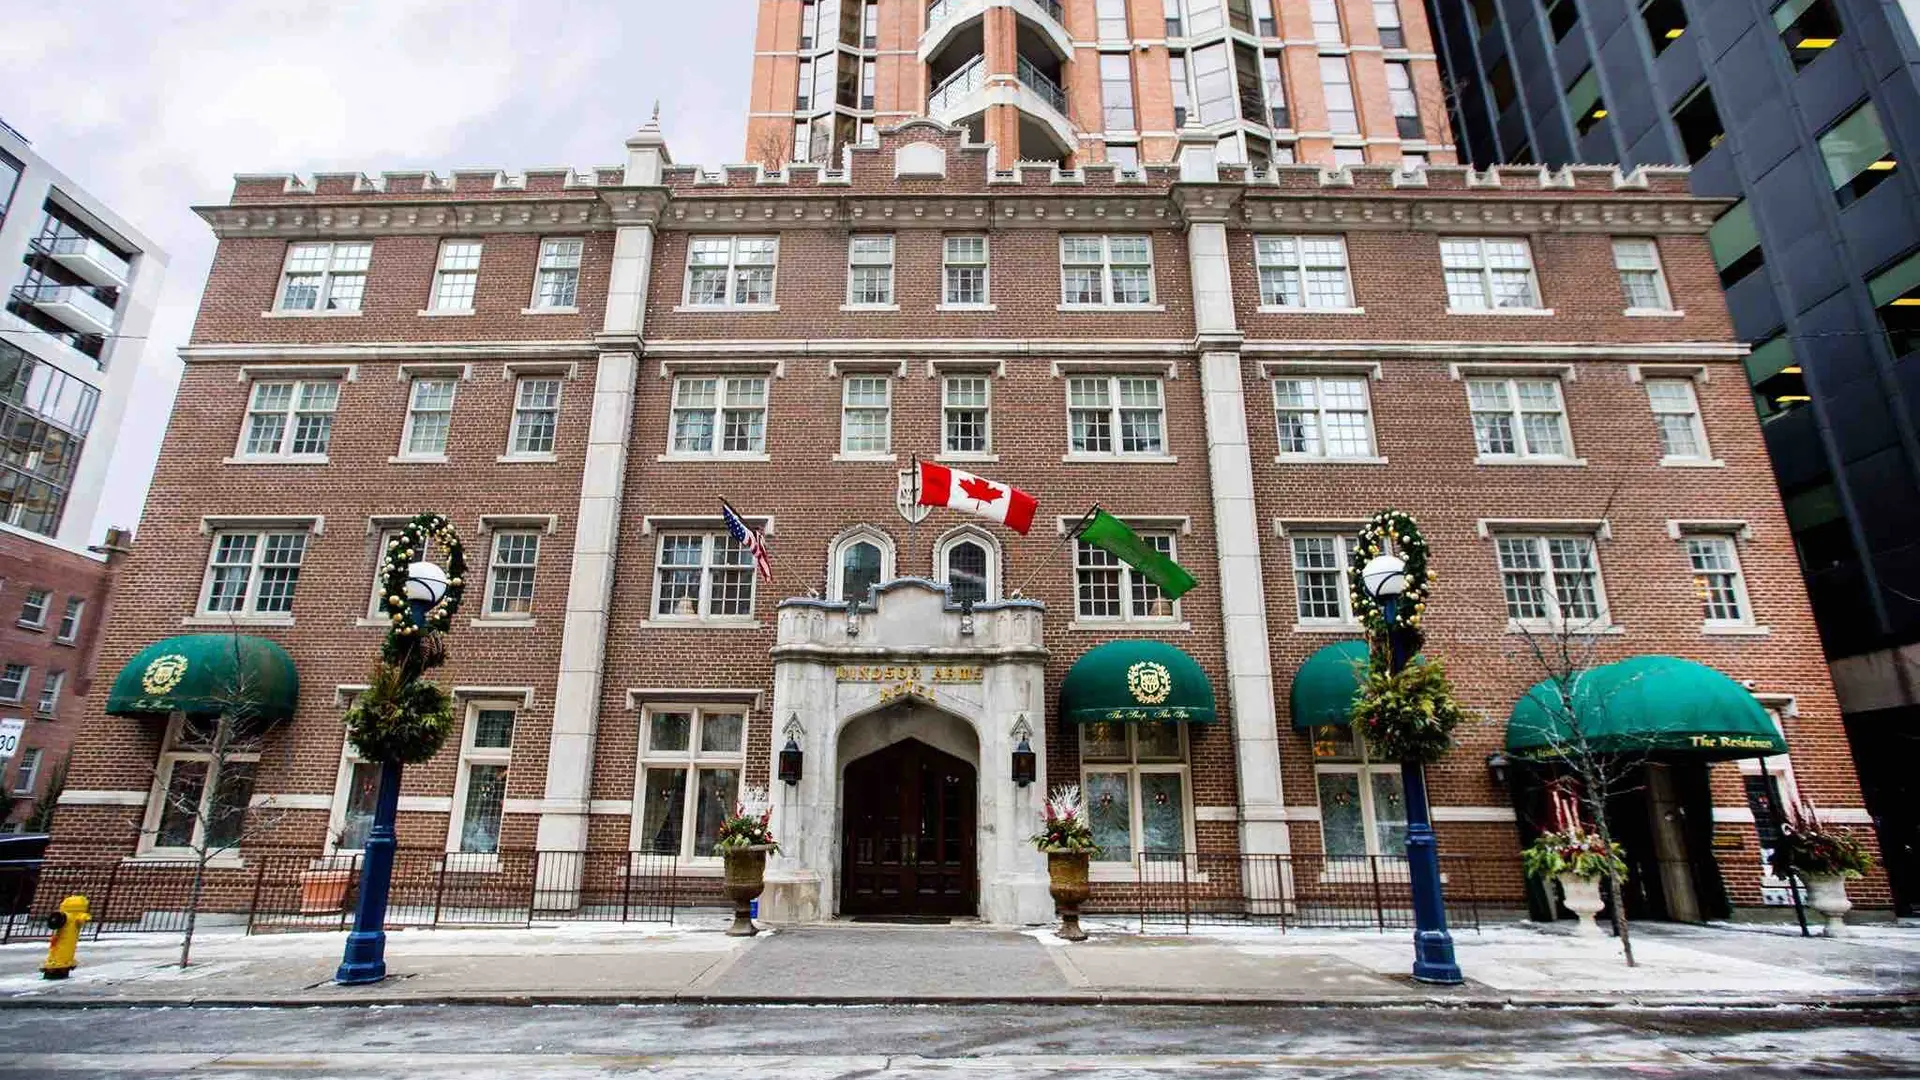 Hotels Toplists - The Best Luxury Hotels In Toronto